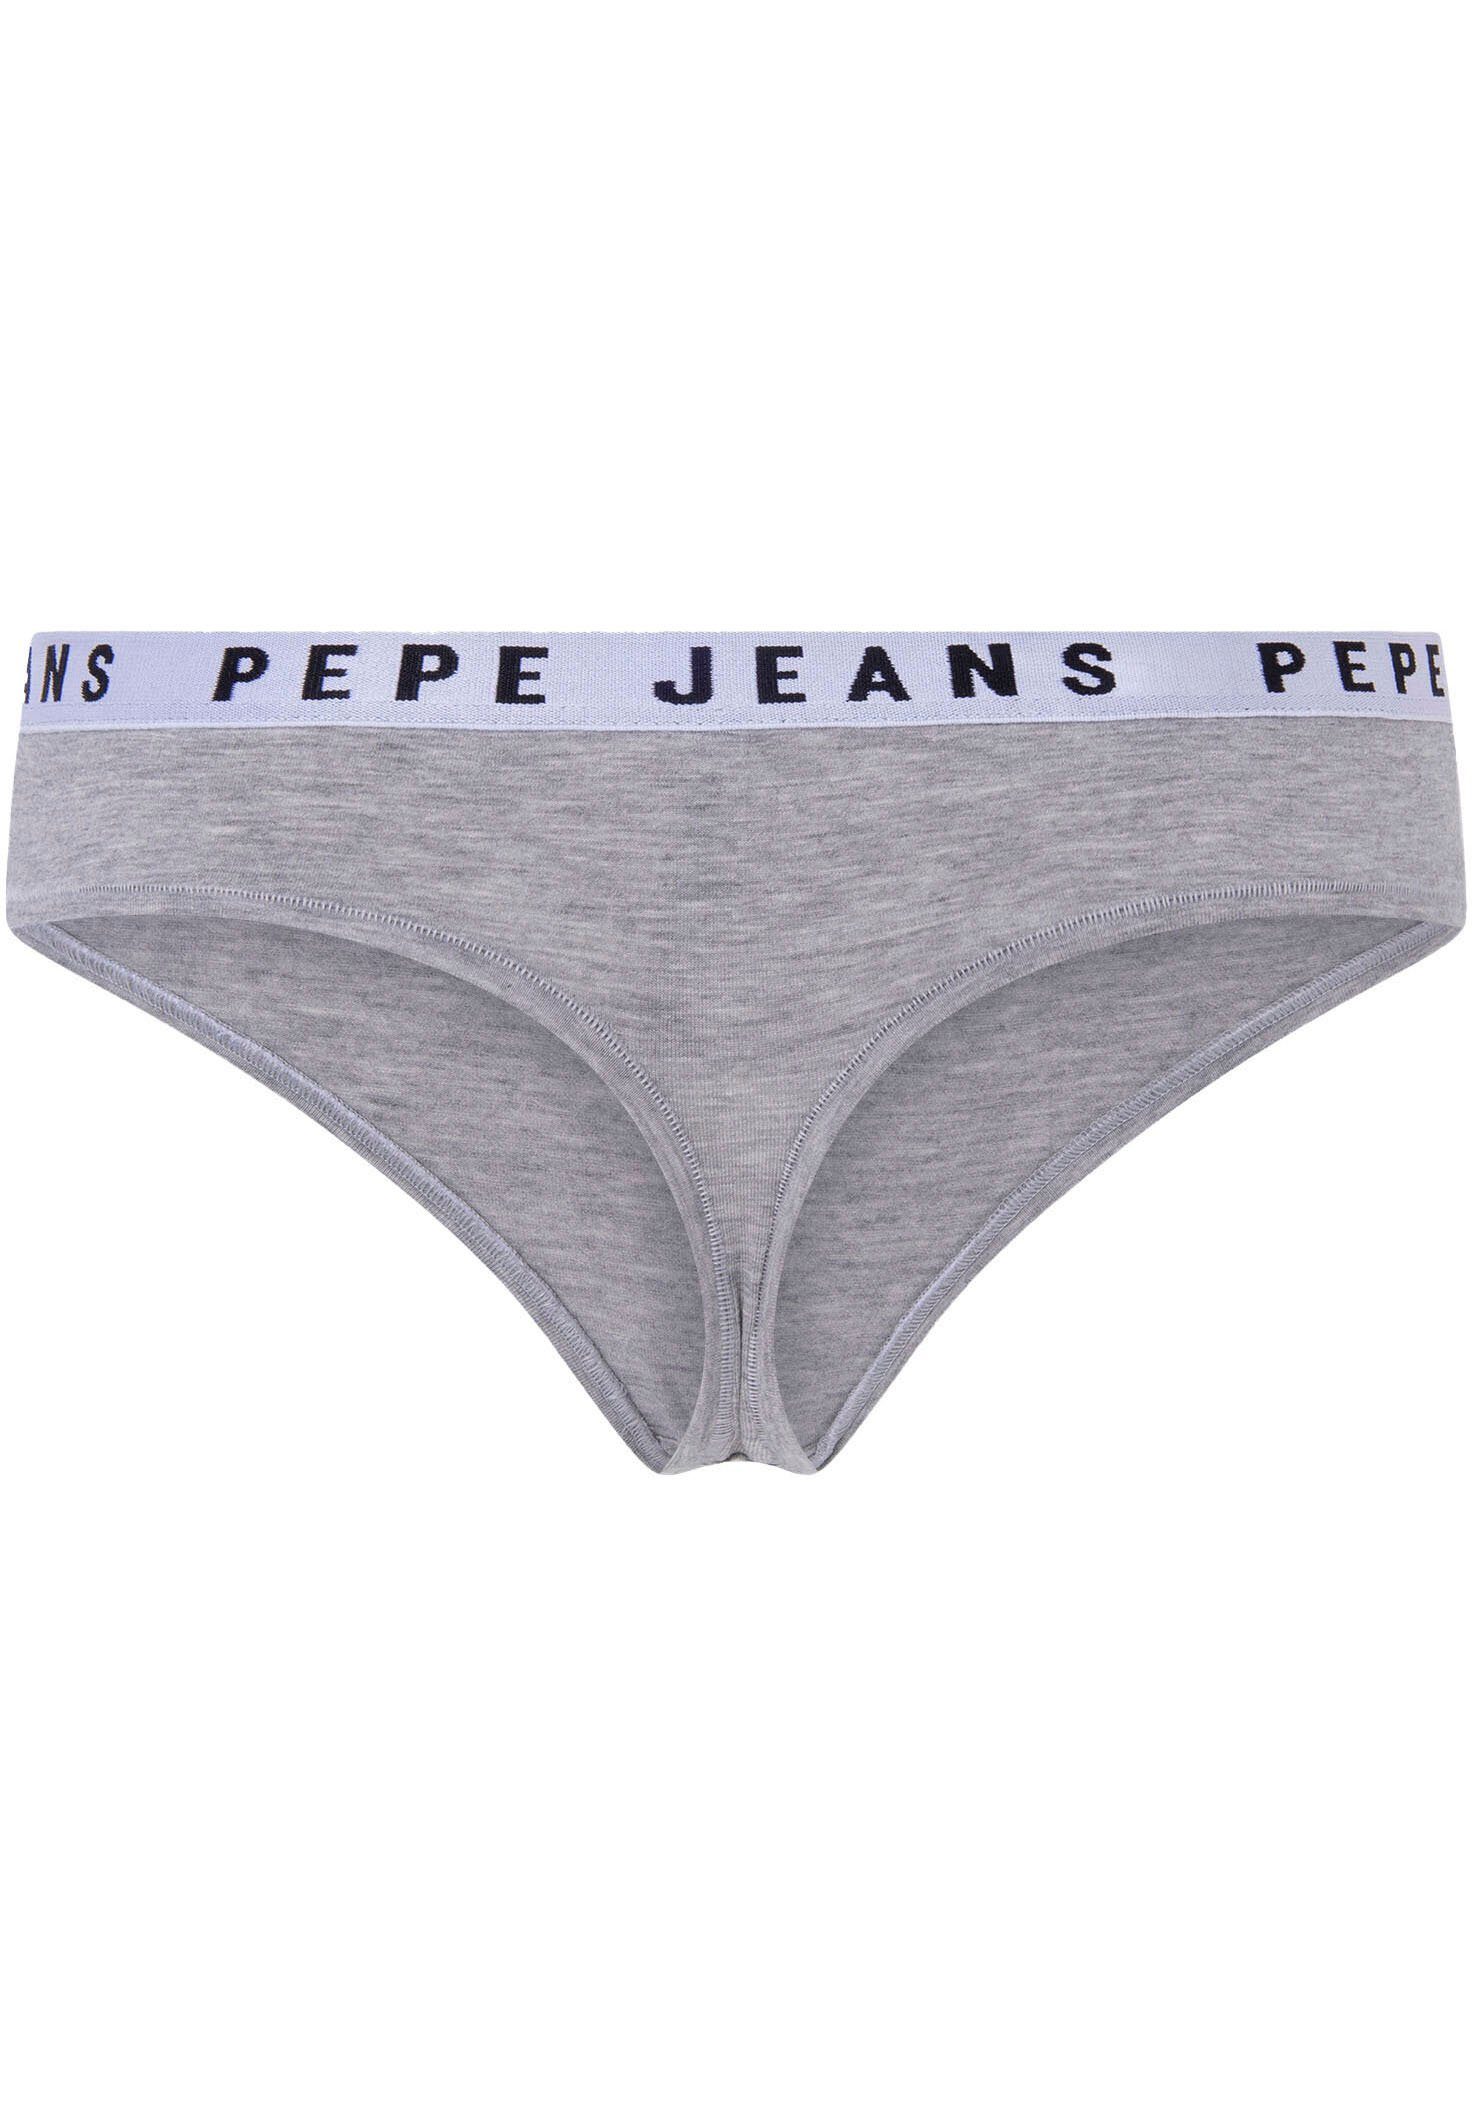 Logo Thong Pepe meliert grau String Jeans